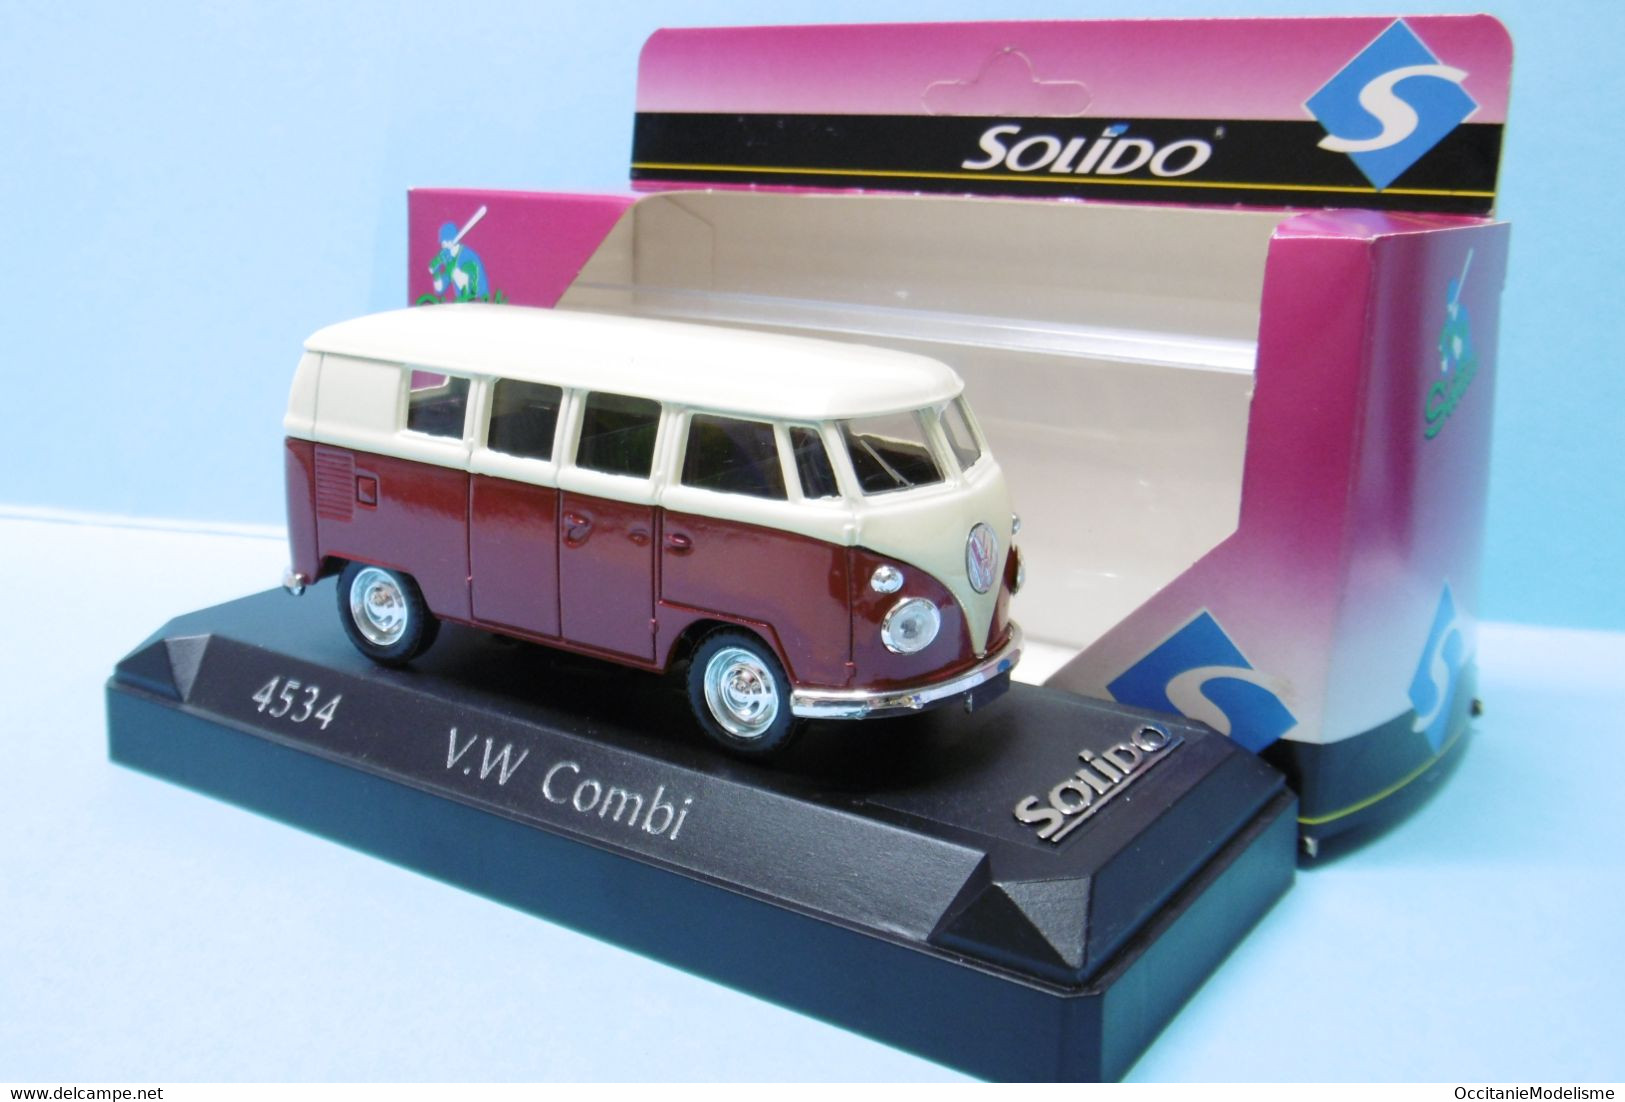 Solido - Solido Sixties - VOLKSWAGEN VW COMBI BUS réf. 4534 BO 1/43